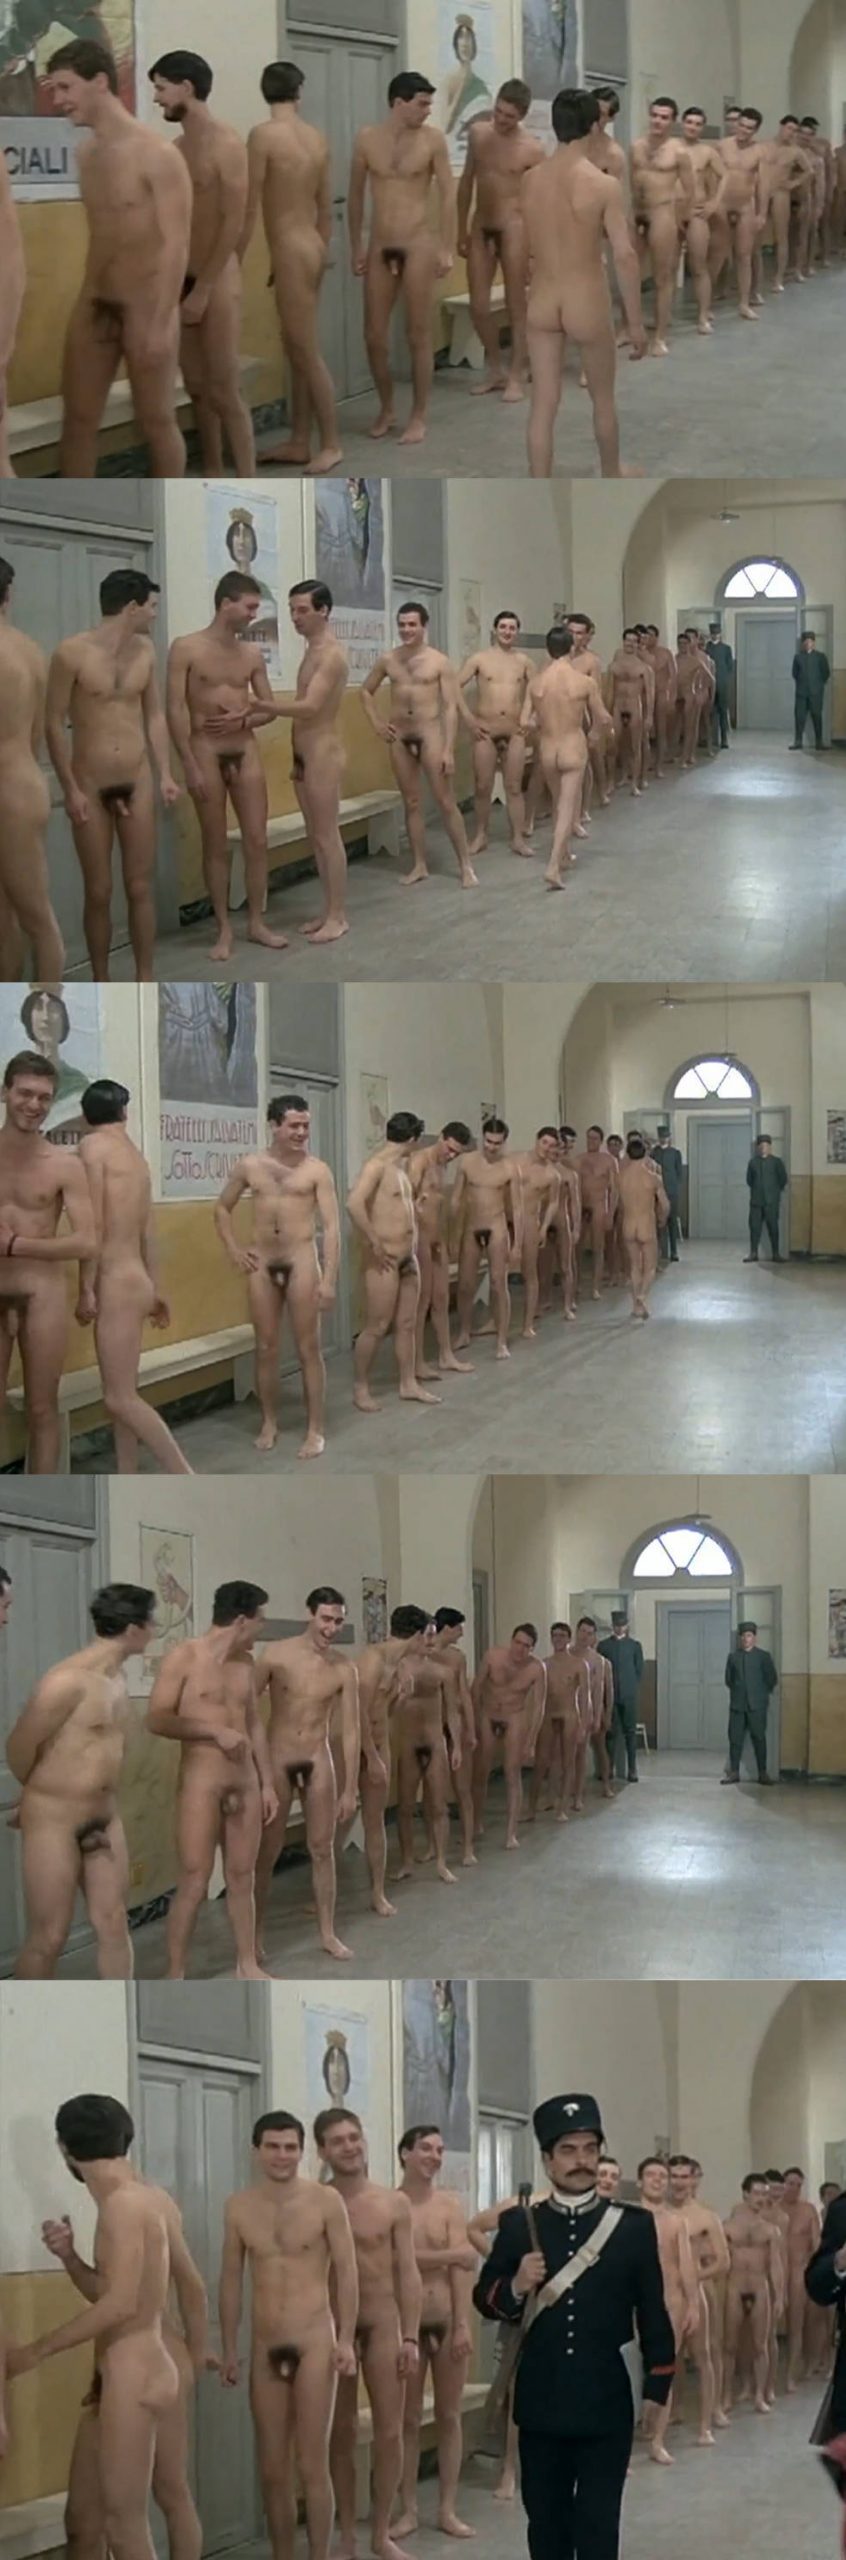 Italian Male Porn Stars 1980s - Guys full frontal naked in an italian movie - Spycamfromguys, hidden cams  spying on men